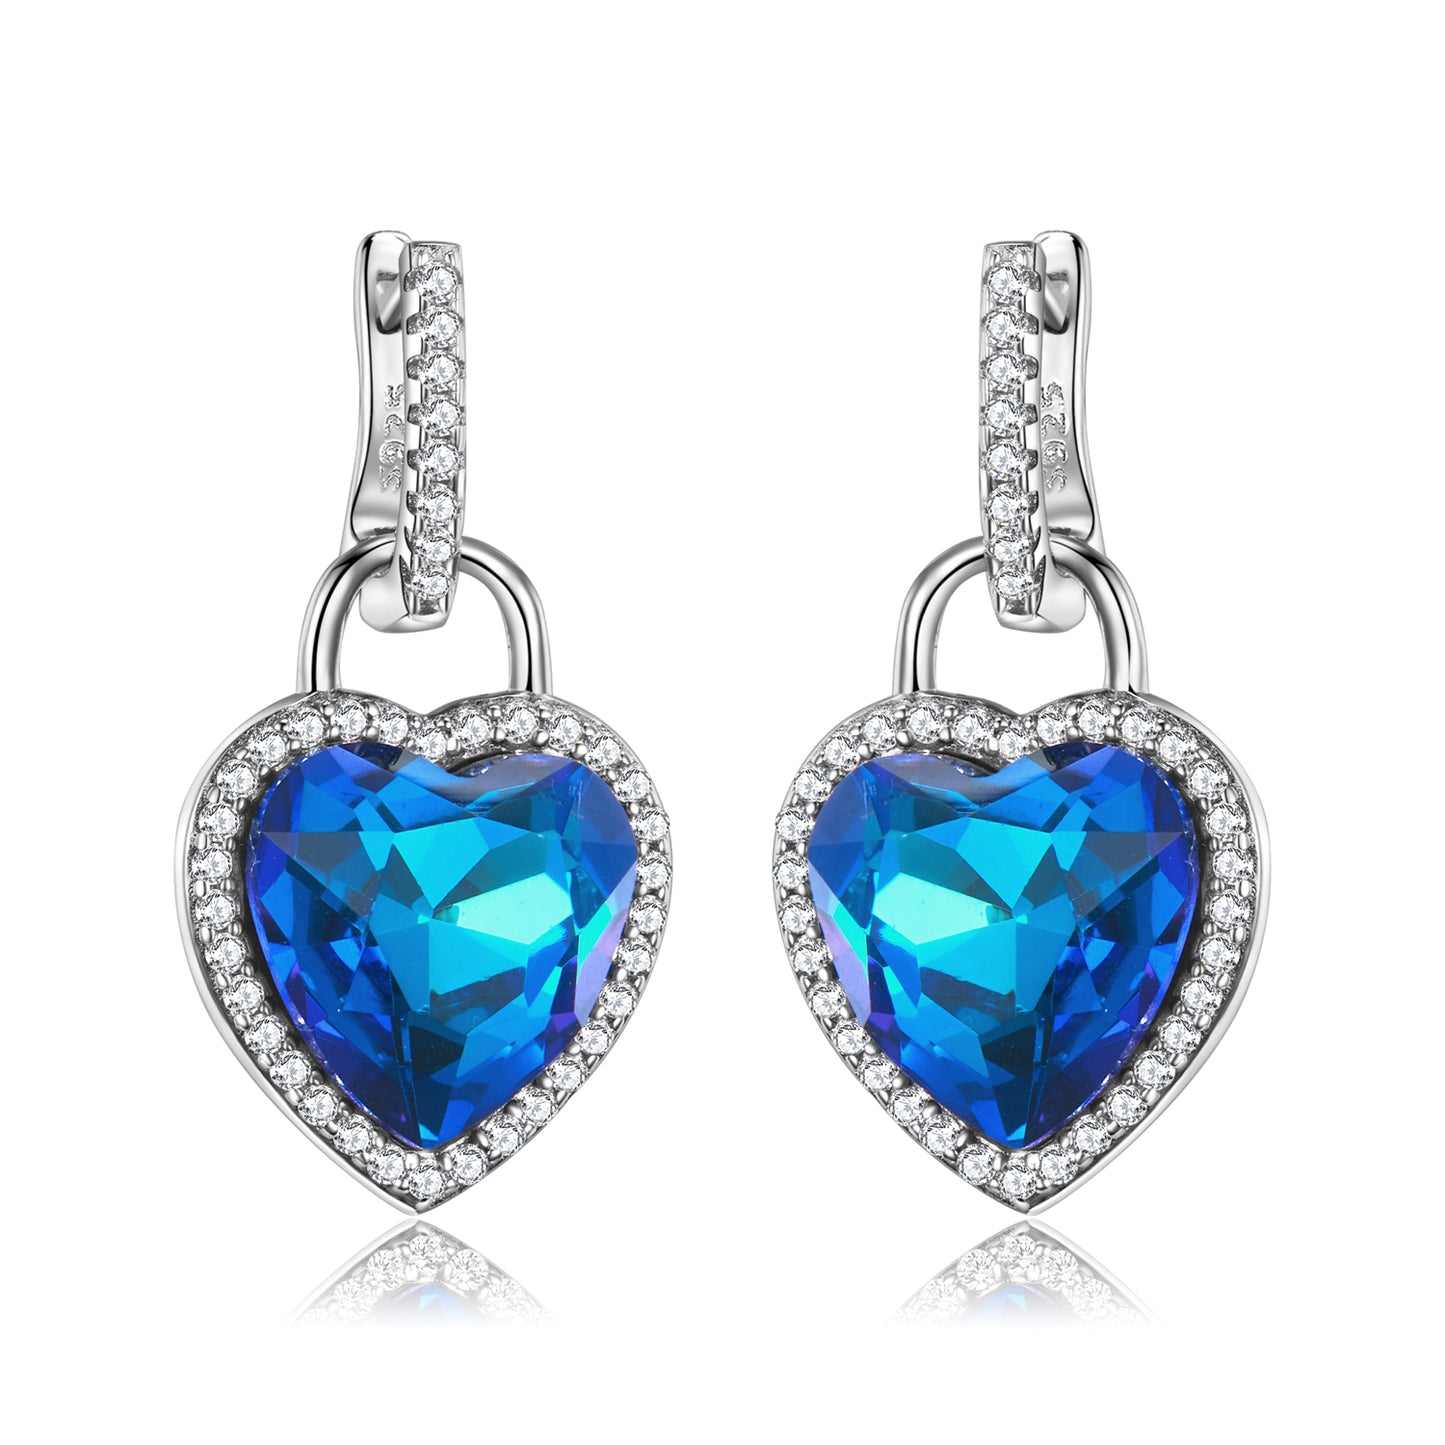 Original Design Romantic Simple Style Heart Shape Sterling Silver Inlay Zircon Women's Earrings Necklace